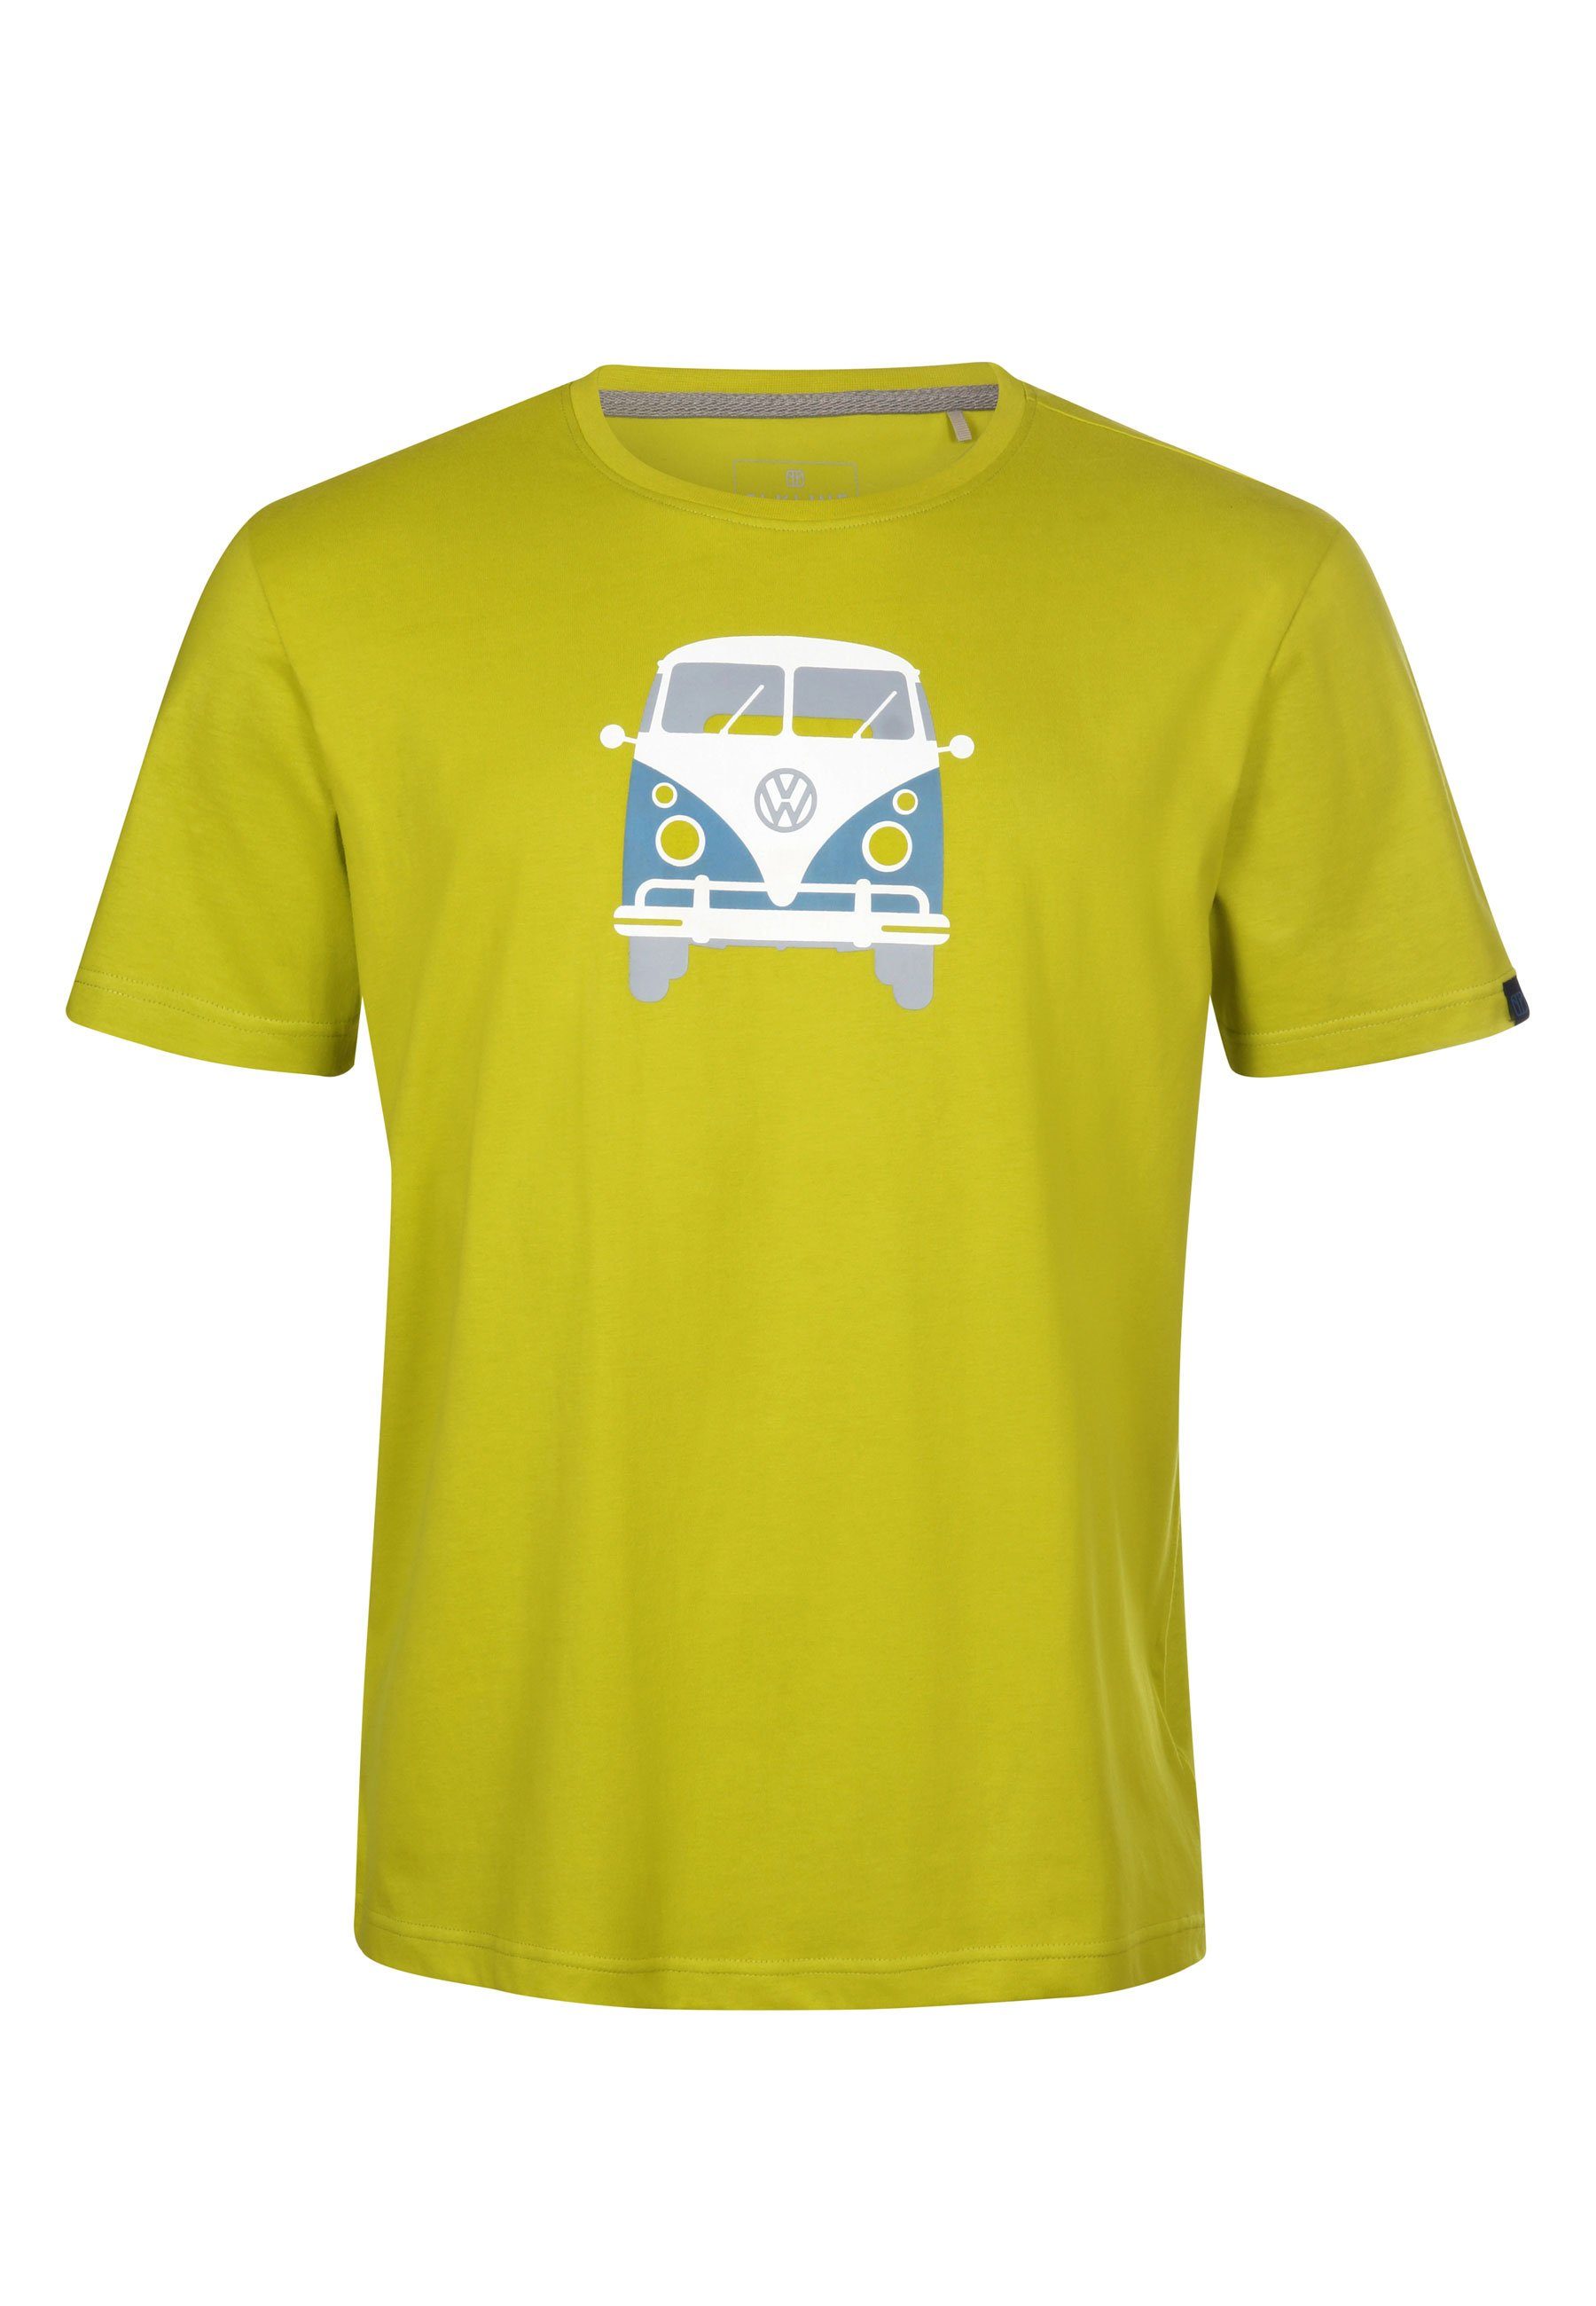 Elkline T-Shirt Methusalem lizenzierter VW Brust Bulli Print Rücken citronelle